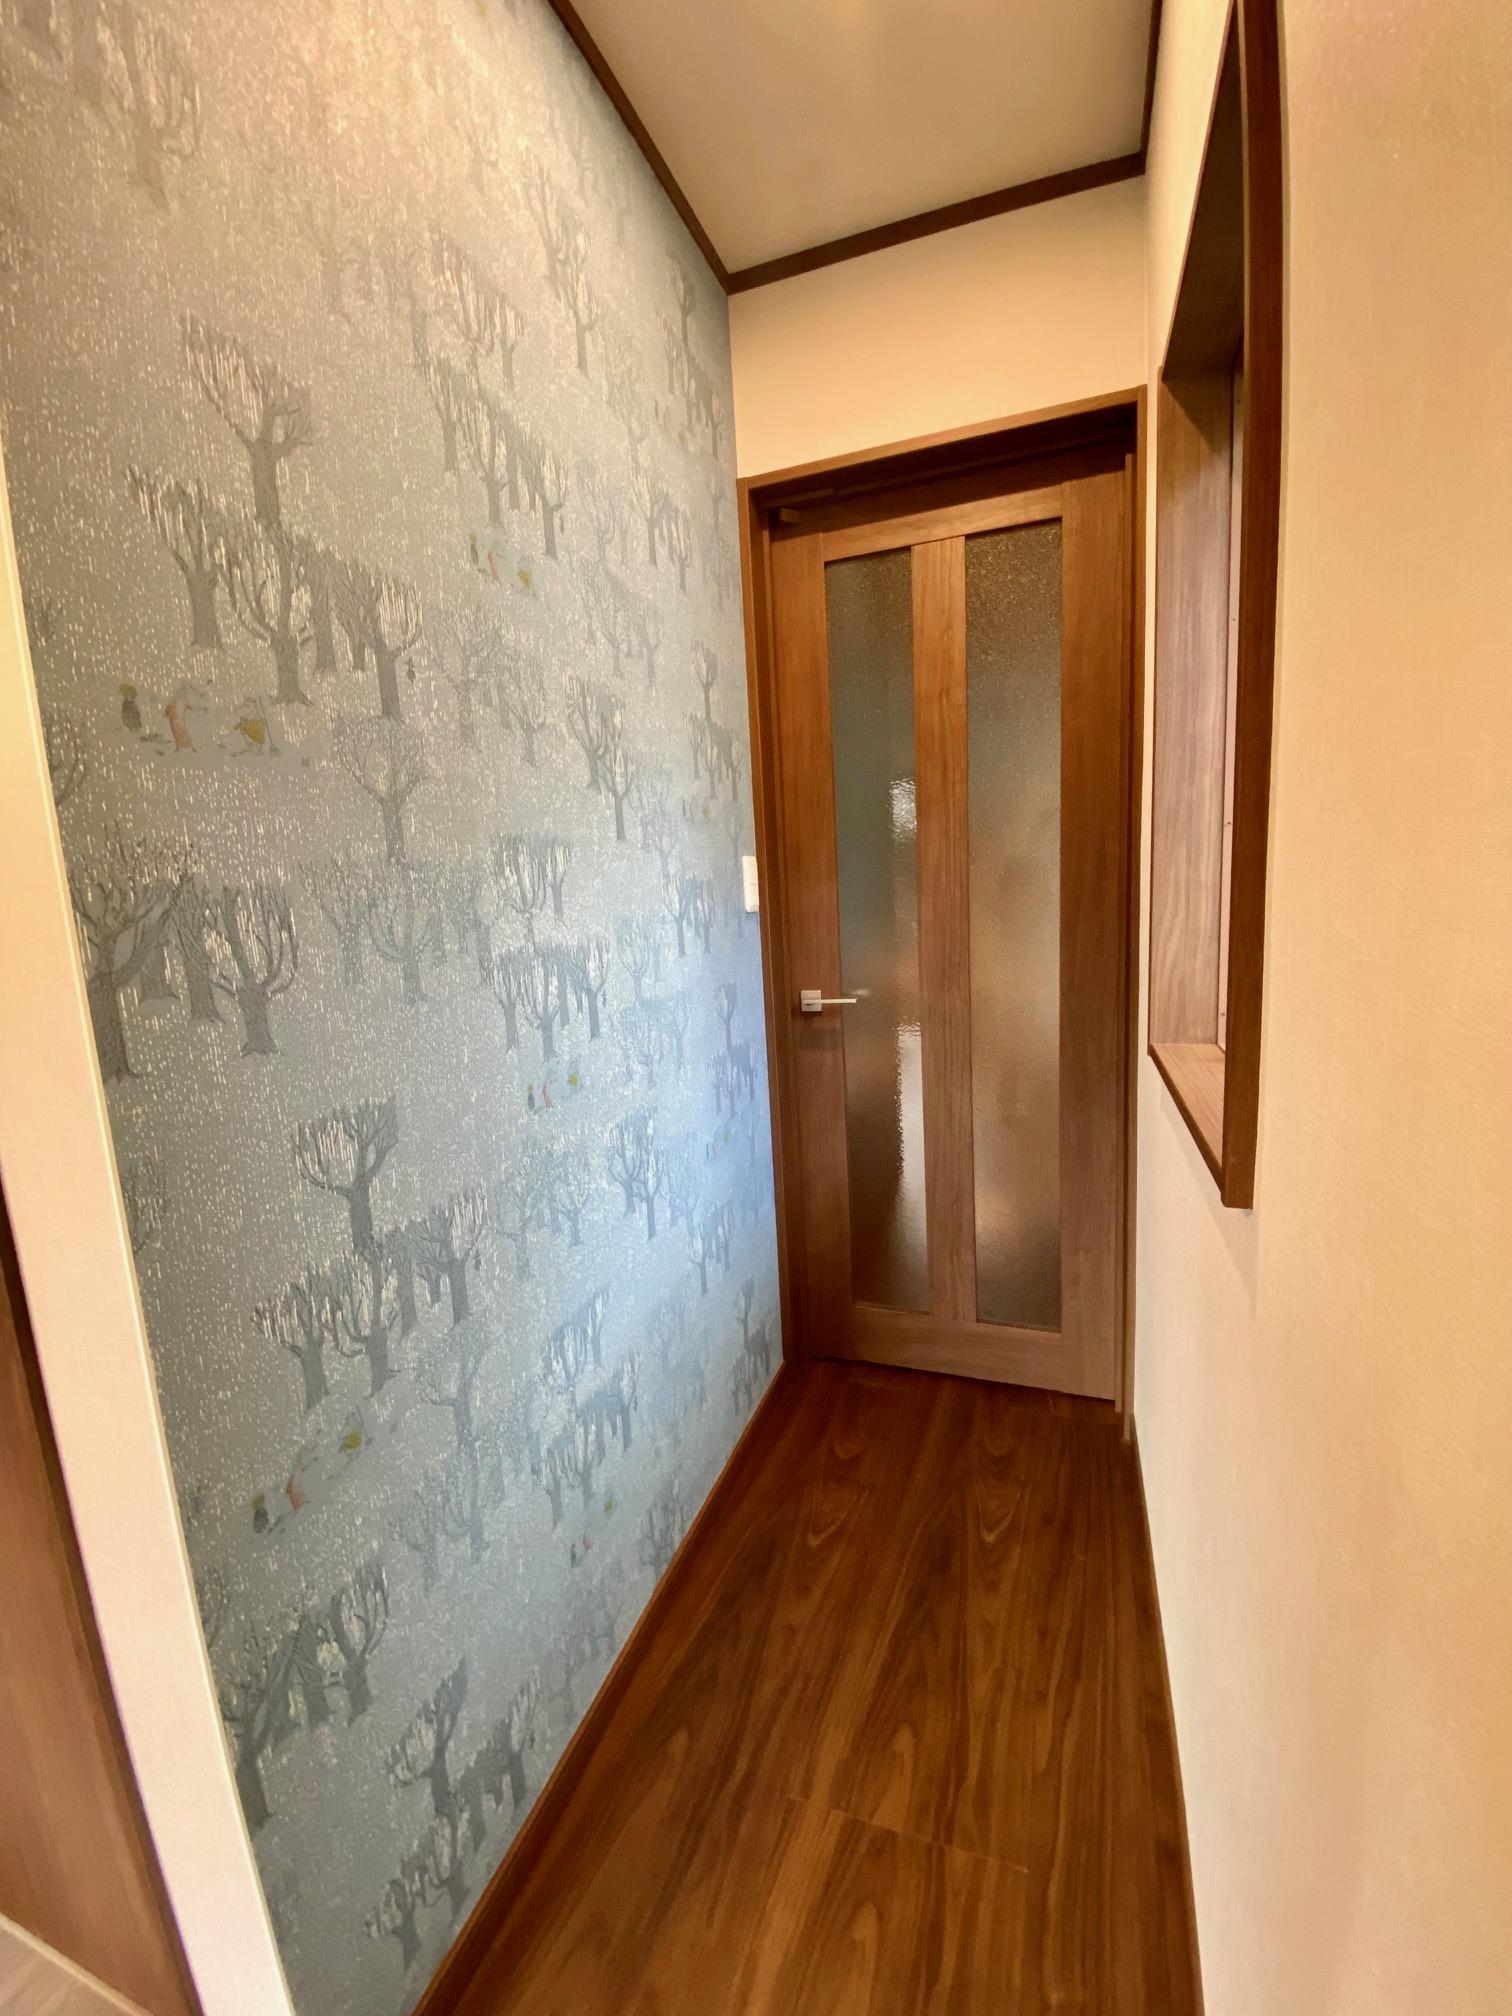 Moominデザイン壁紙をアクセントクロスにした 北欧テイストな寝室 宇都宮市